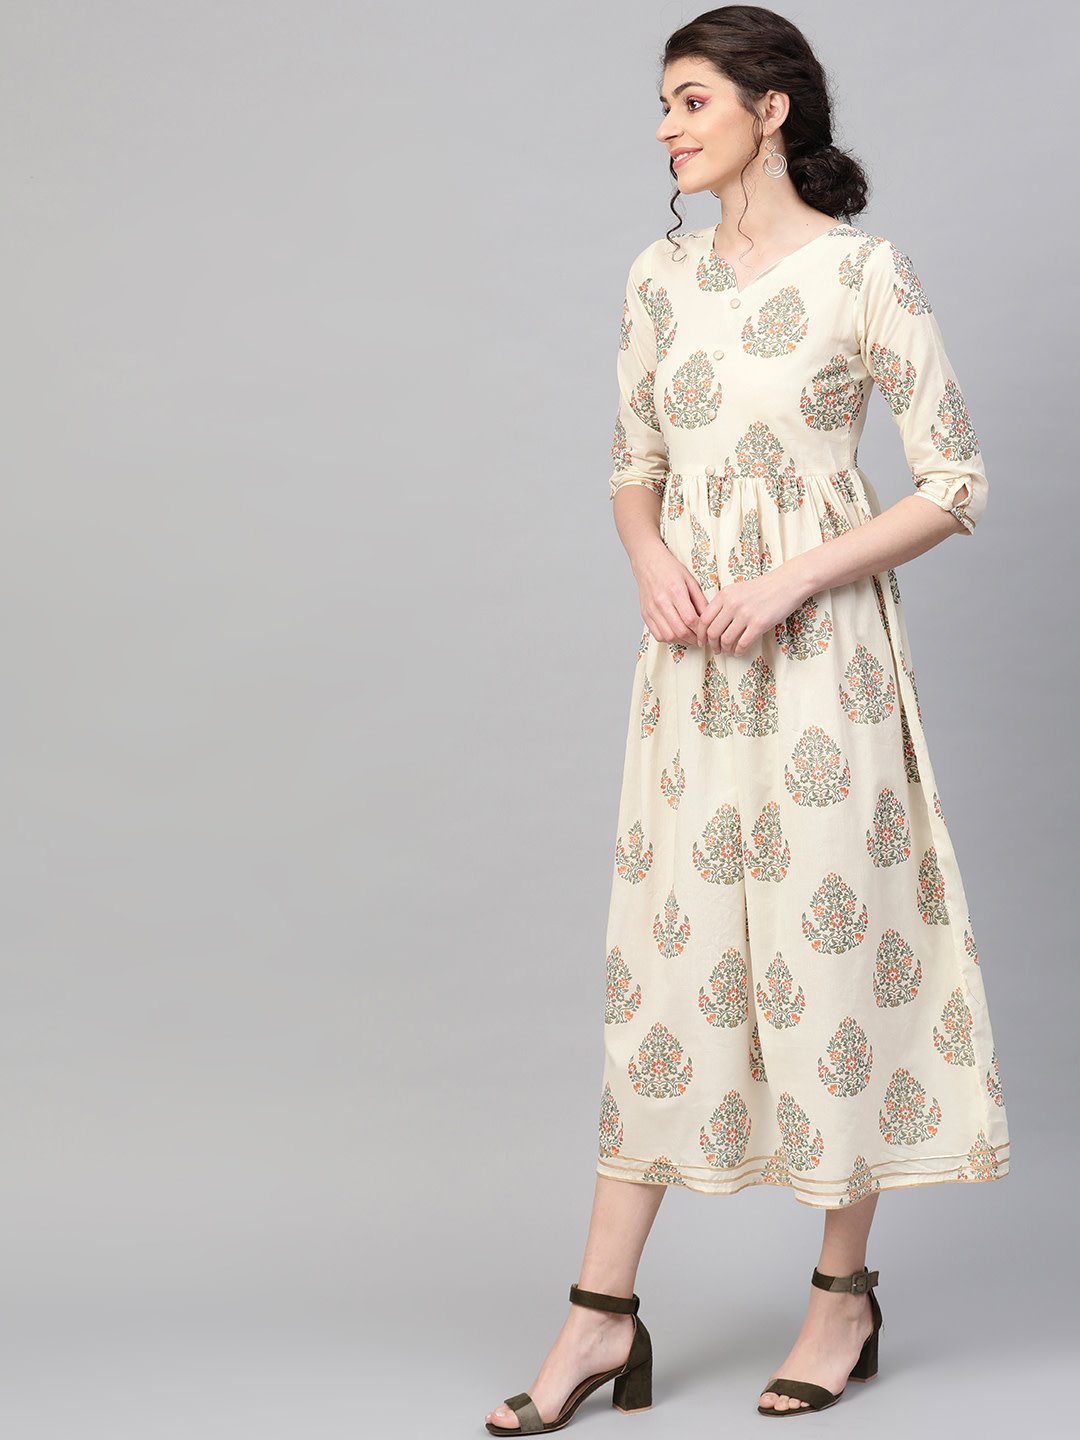 Women's Off White & Gold Ethnic Motifs Printed Maxi Dress - Nayo Clothing